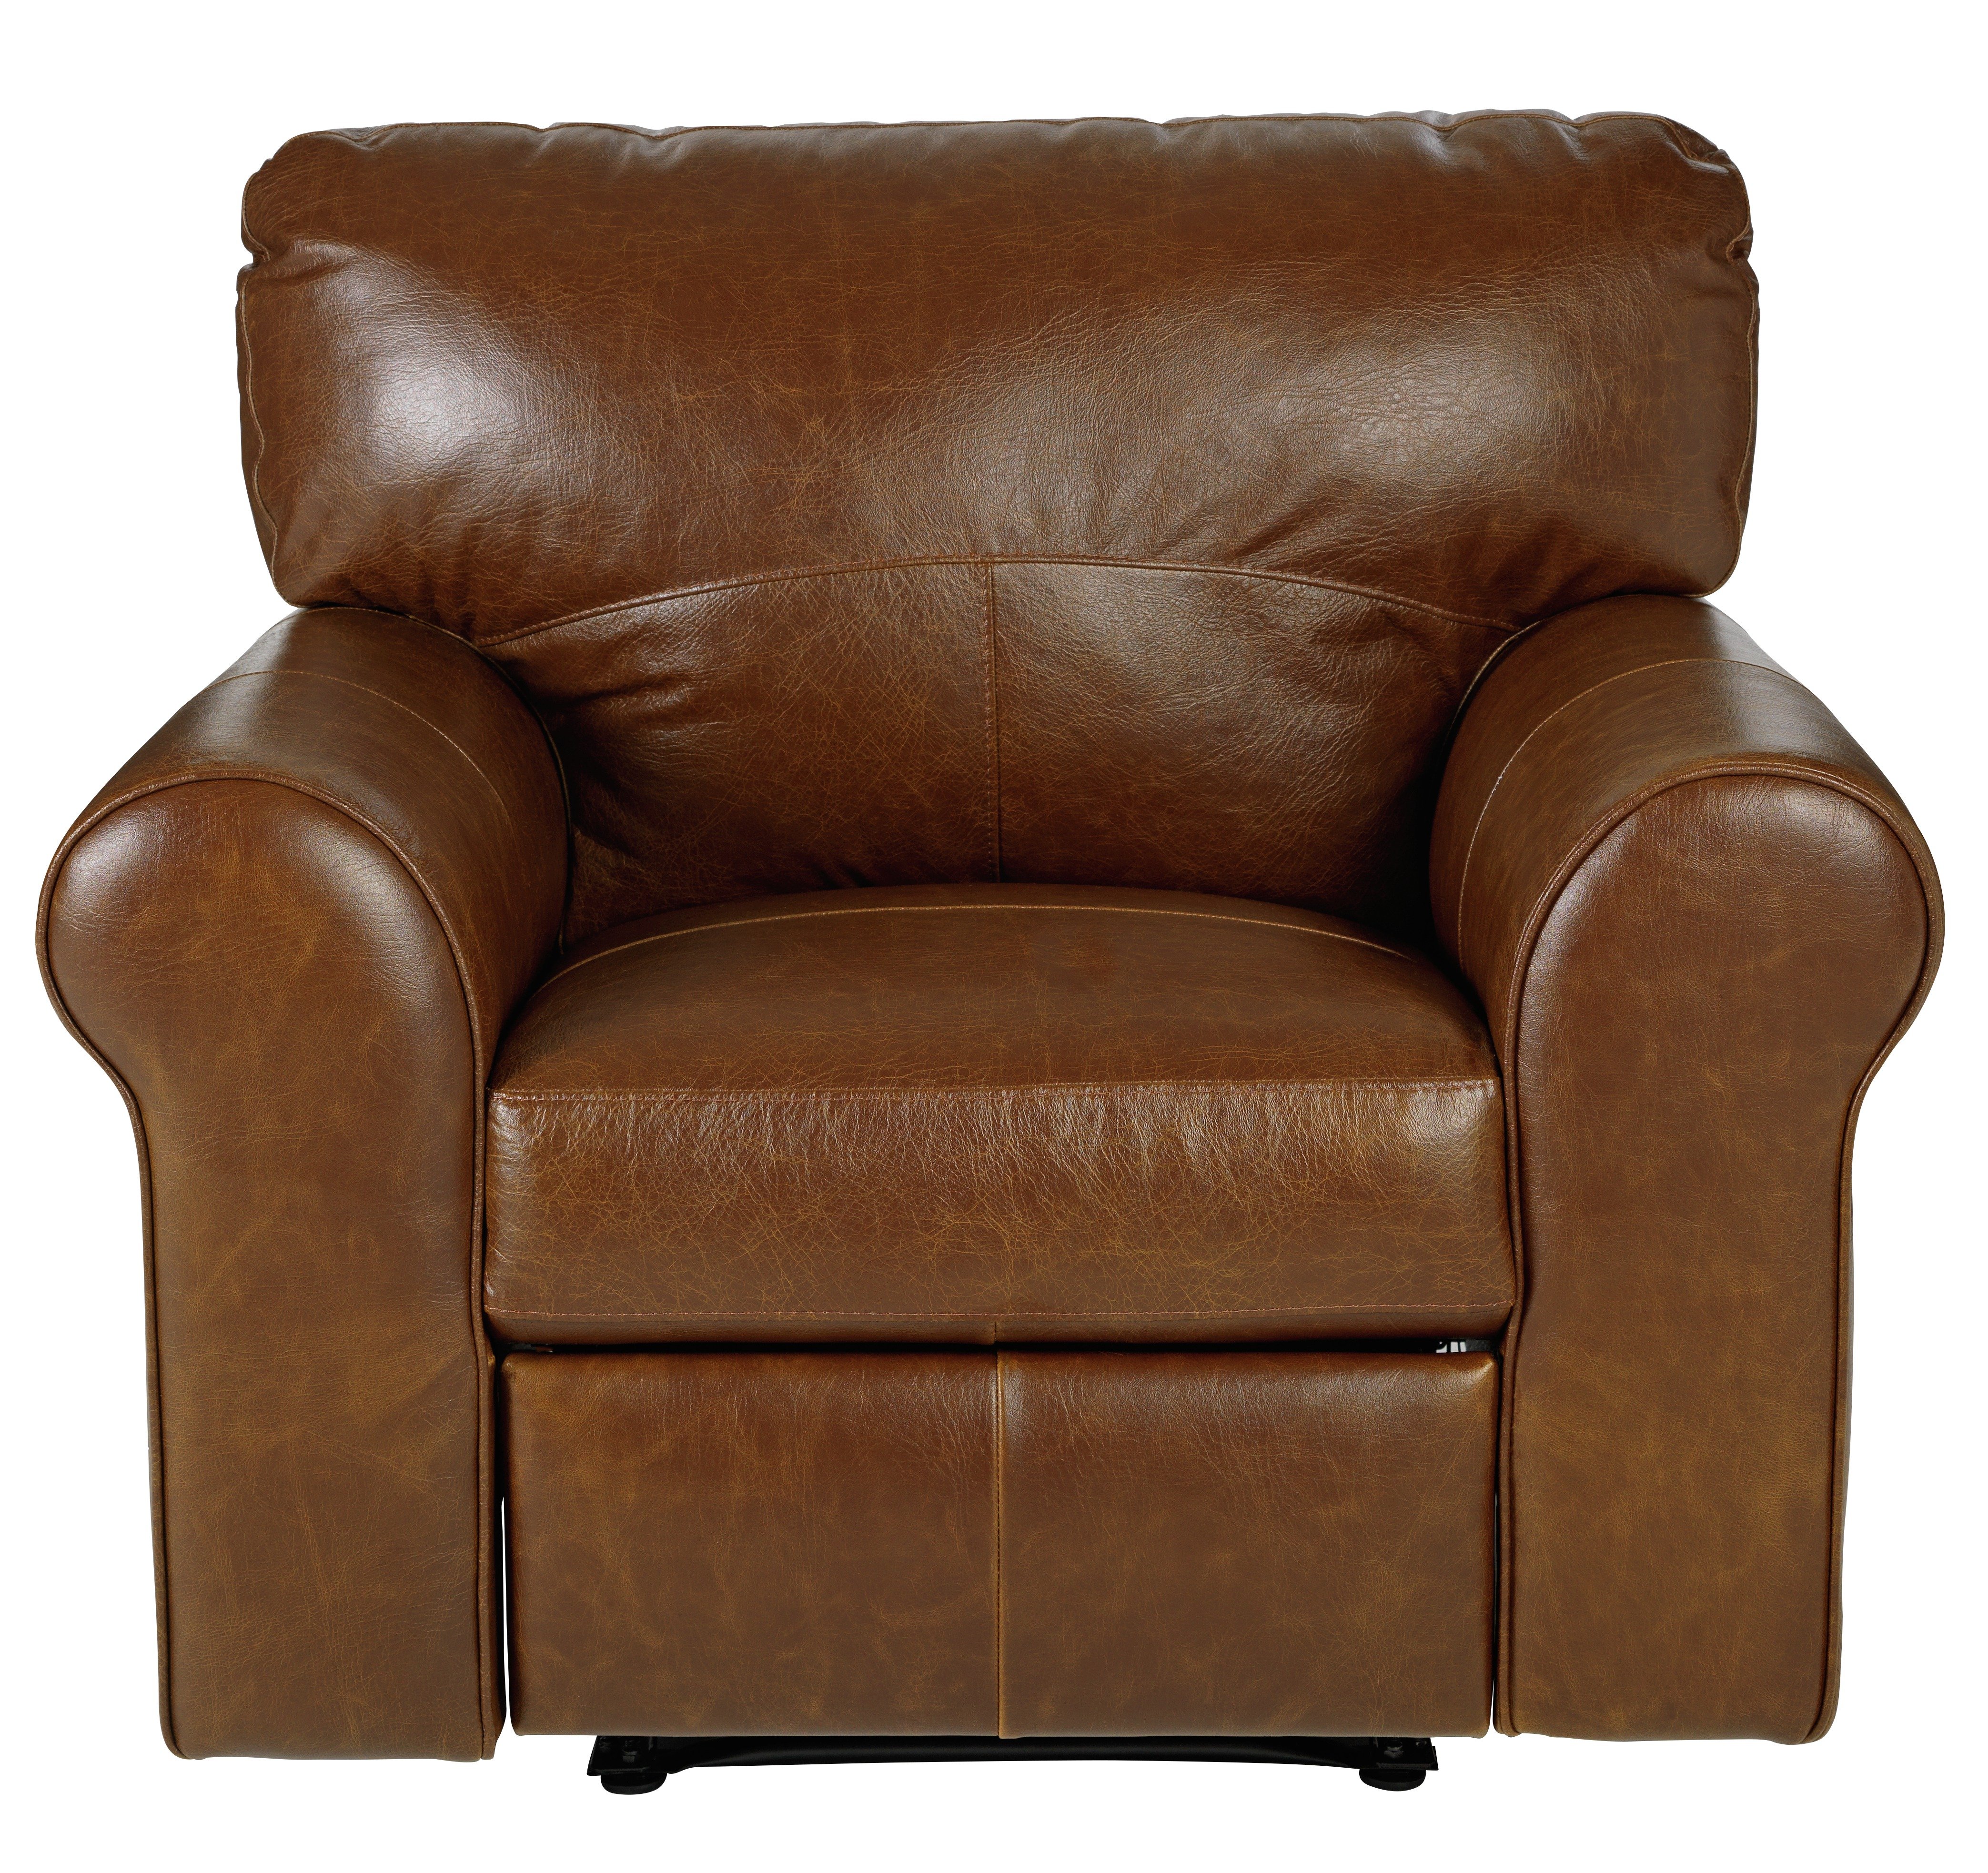 Argos Home Salisbury Leather Manual Recliner Chair